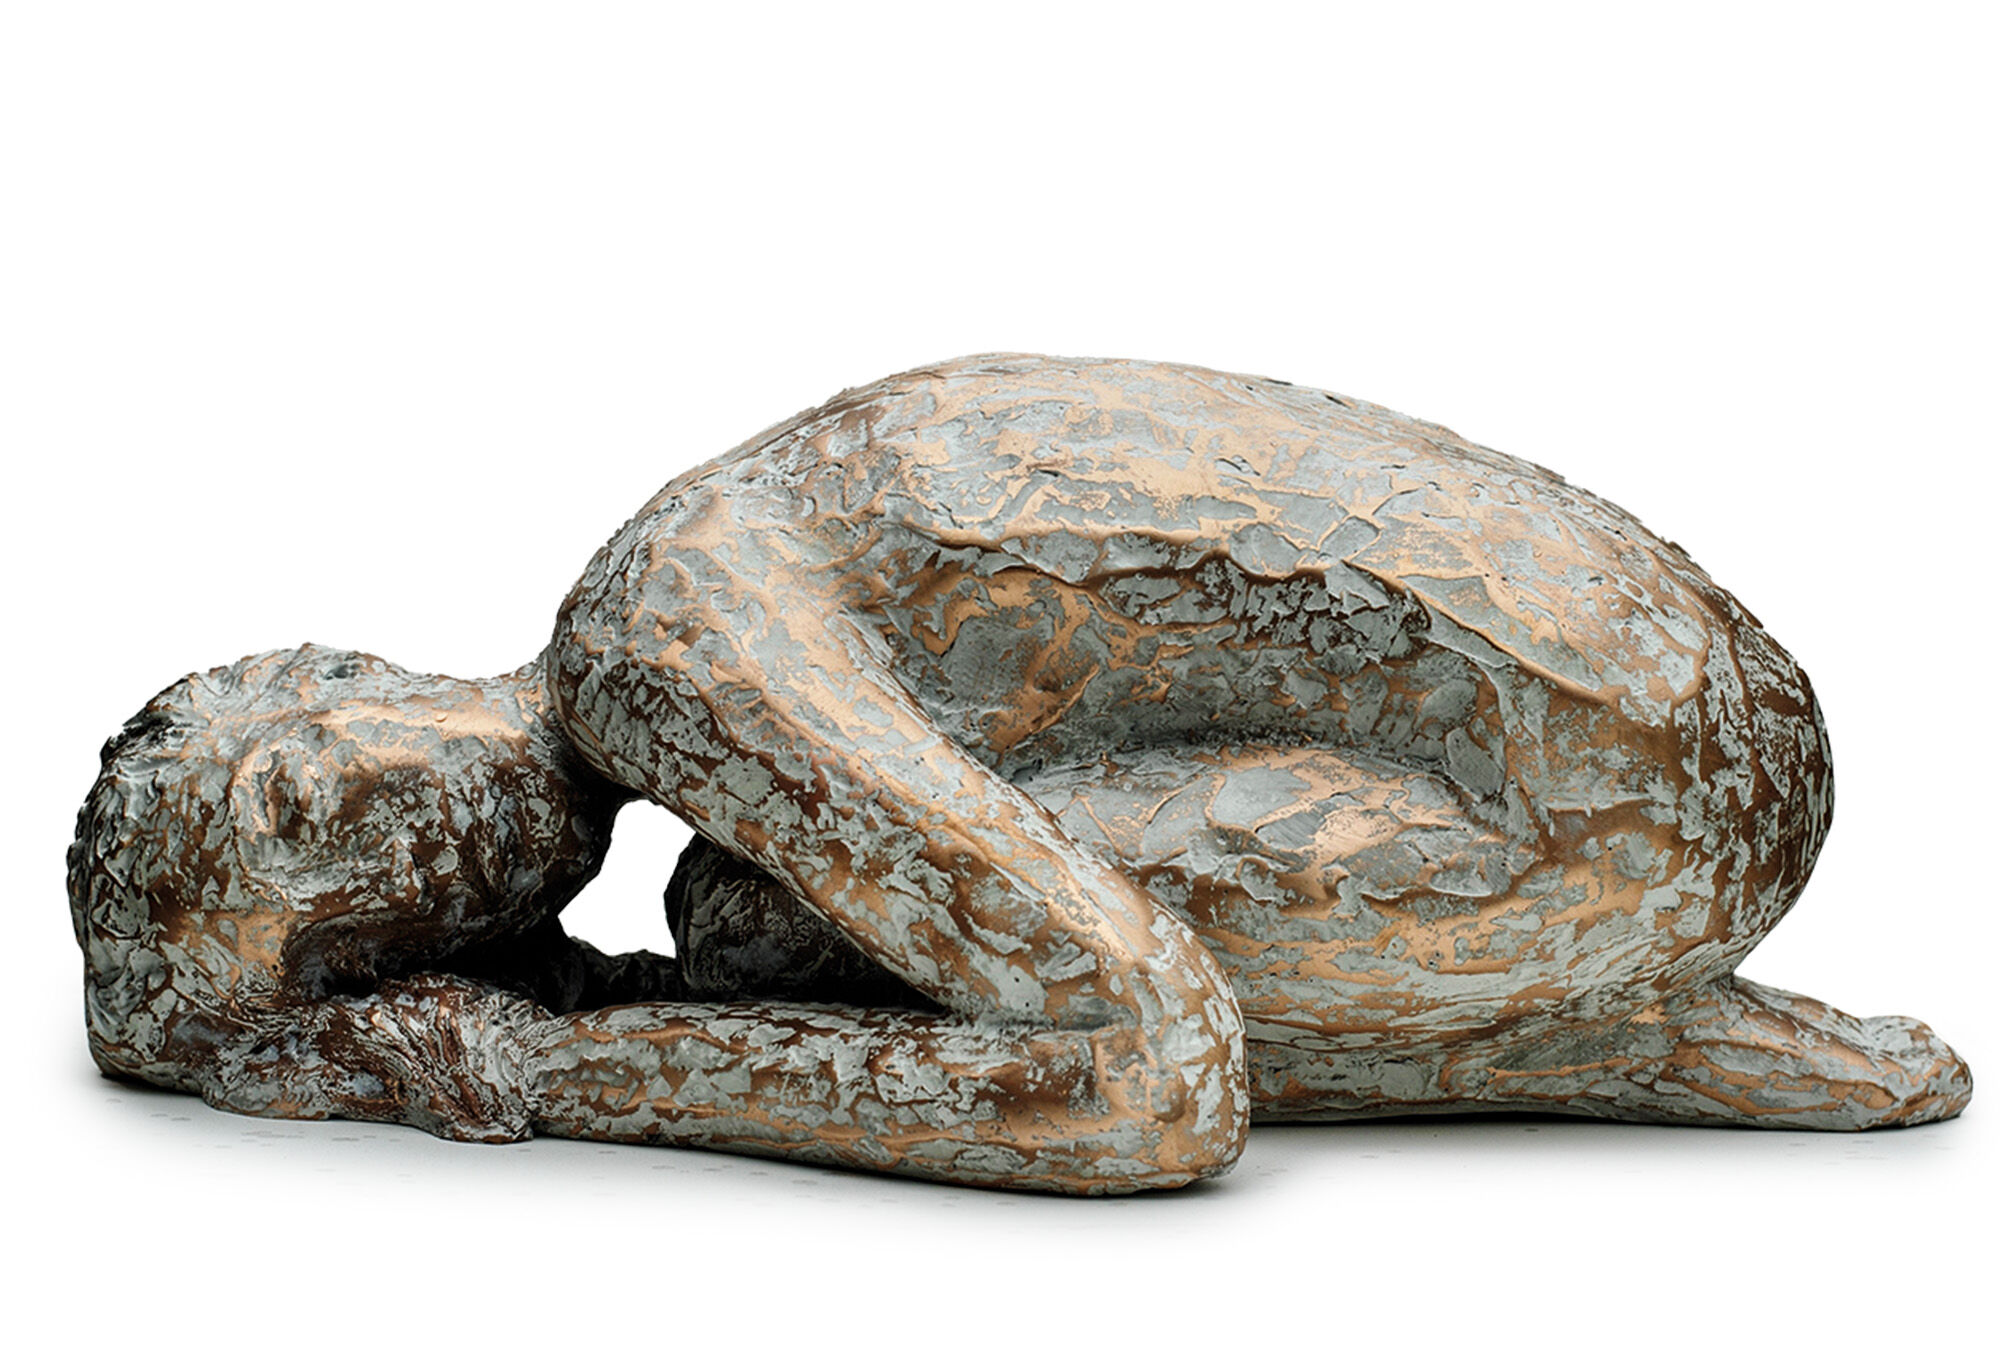 Sculpture "Rest" (2022), bronze by Dagmar Vogt